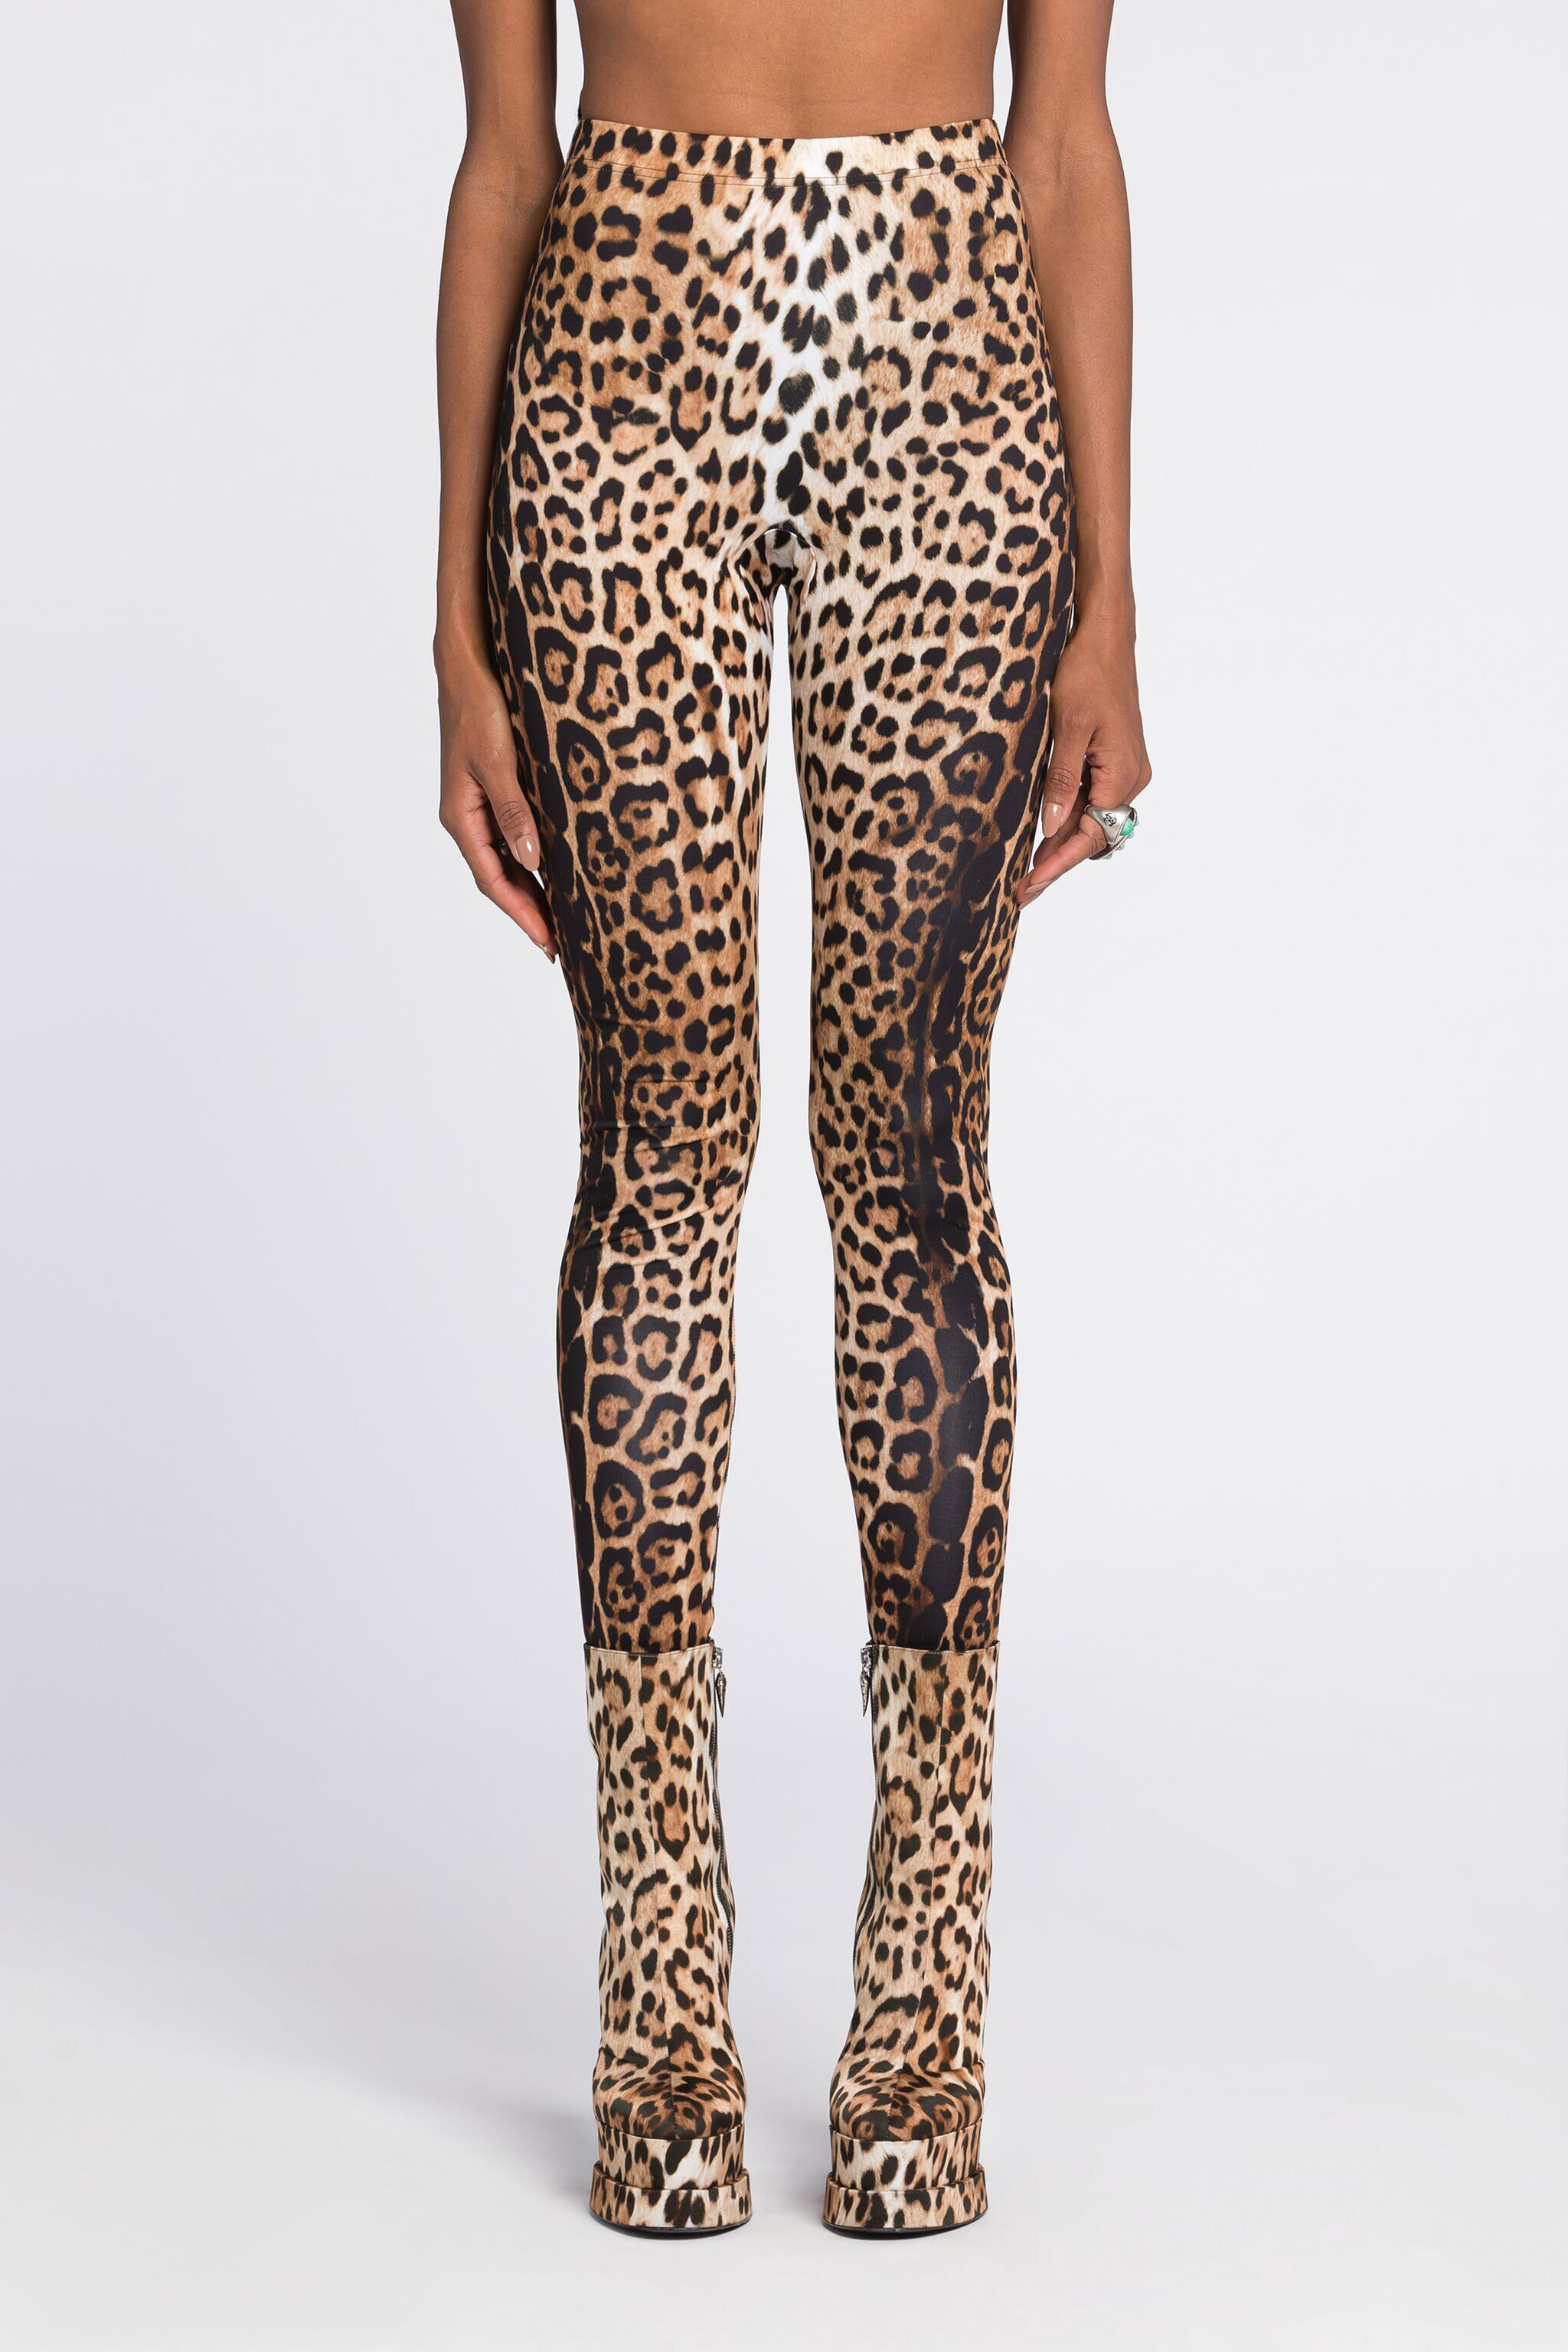 Leopard Leggings – Love Fitness Apparel